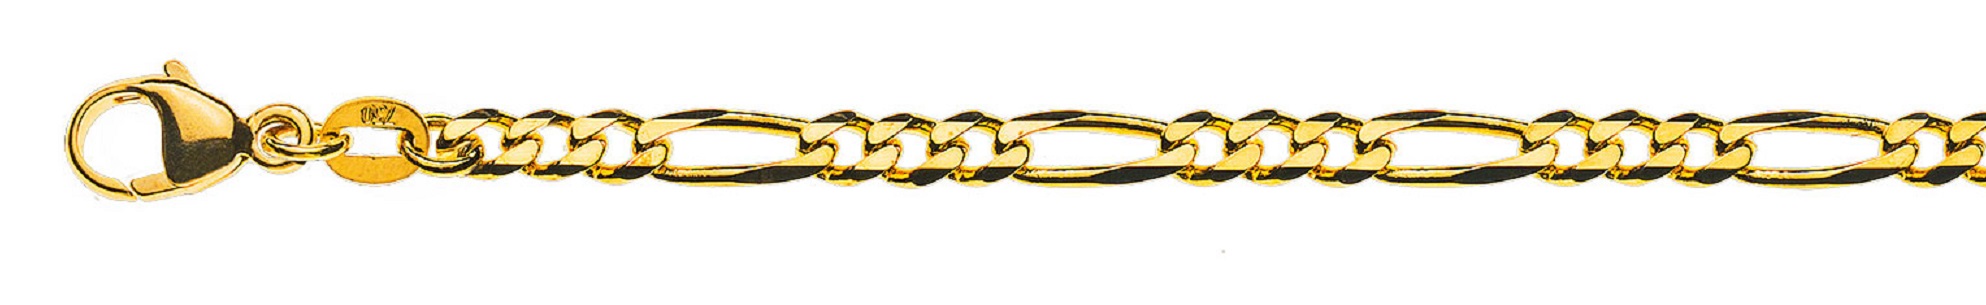 AURONOS Prestige Necklace yellow gold 18K Figaro necklace 45cm 3.4mm